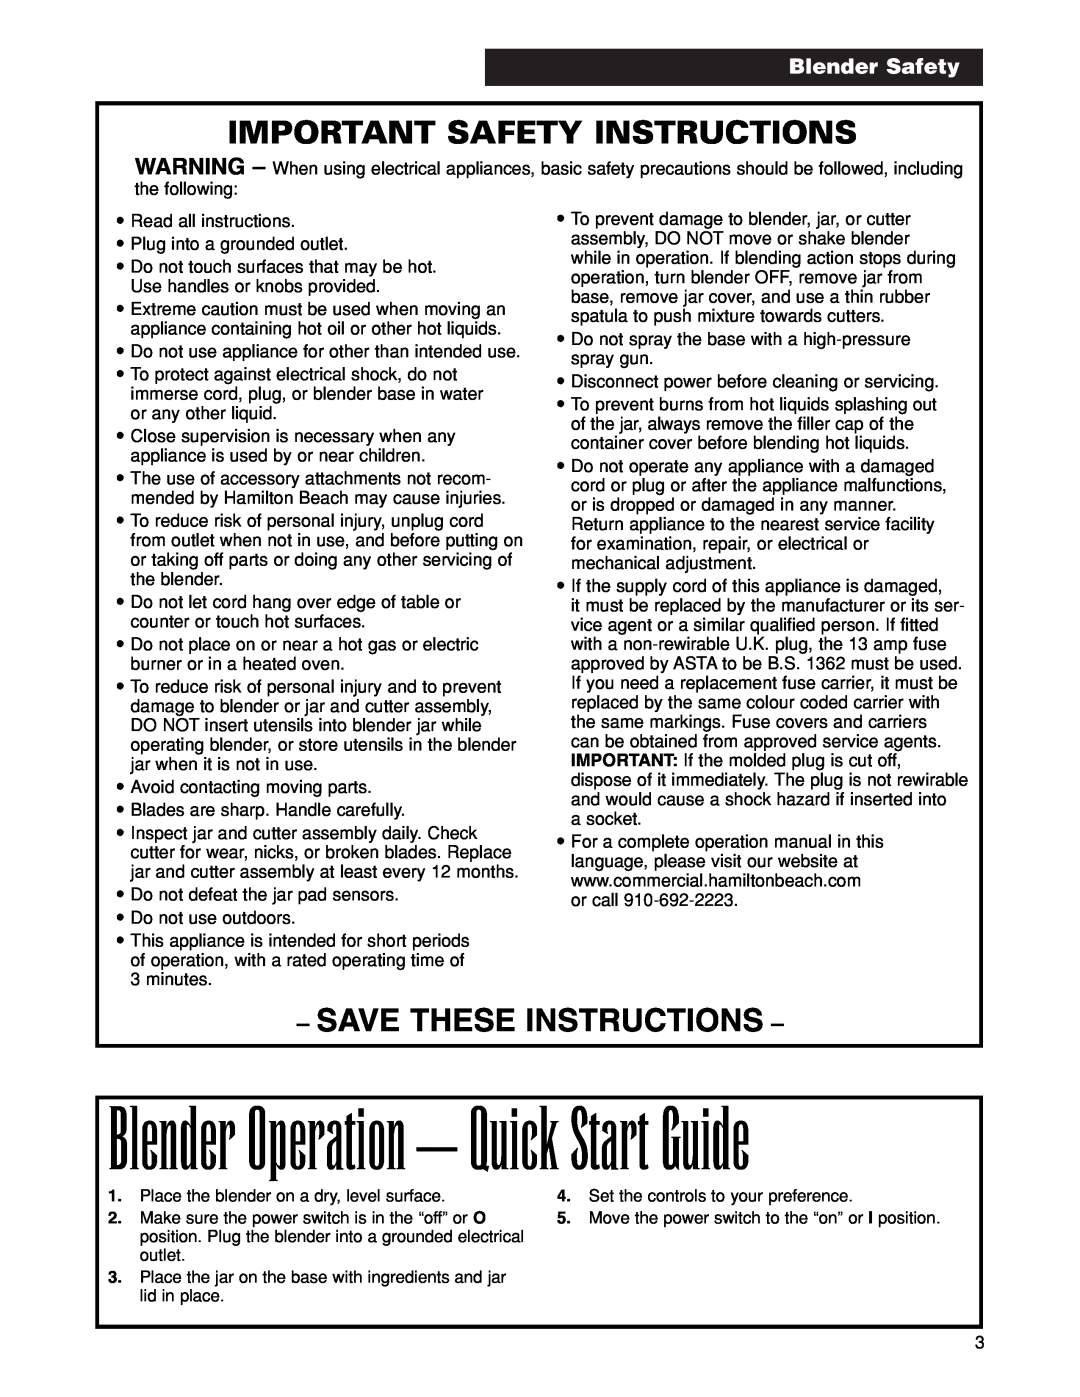 Hamilton Beach 901 manuel dutilisation Blender Safety, Blender Operation - Quick Start Guide, Important Safety Instructions 